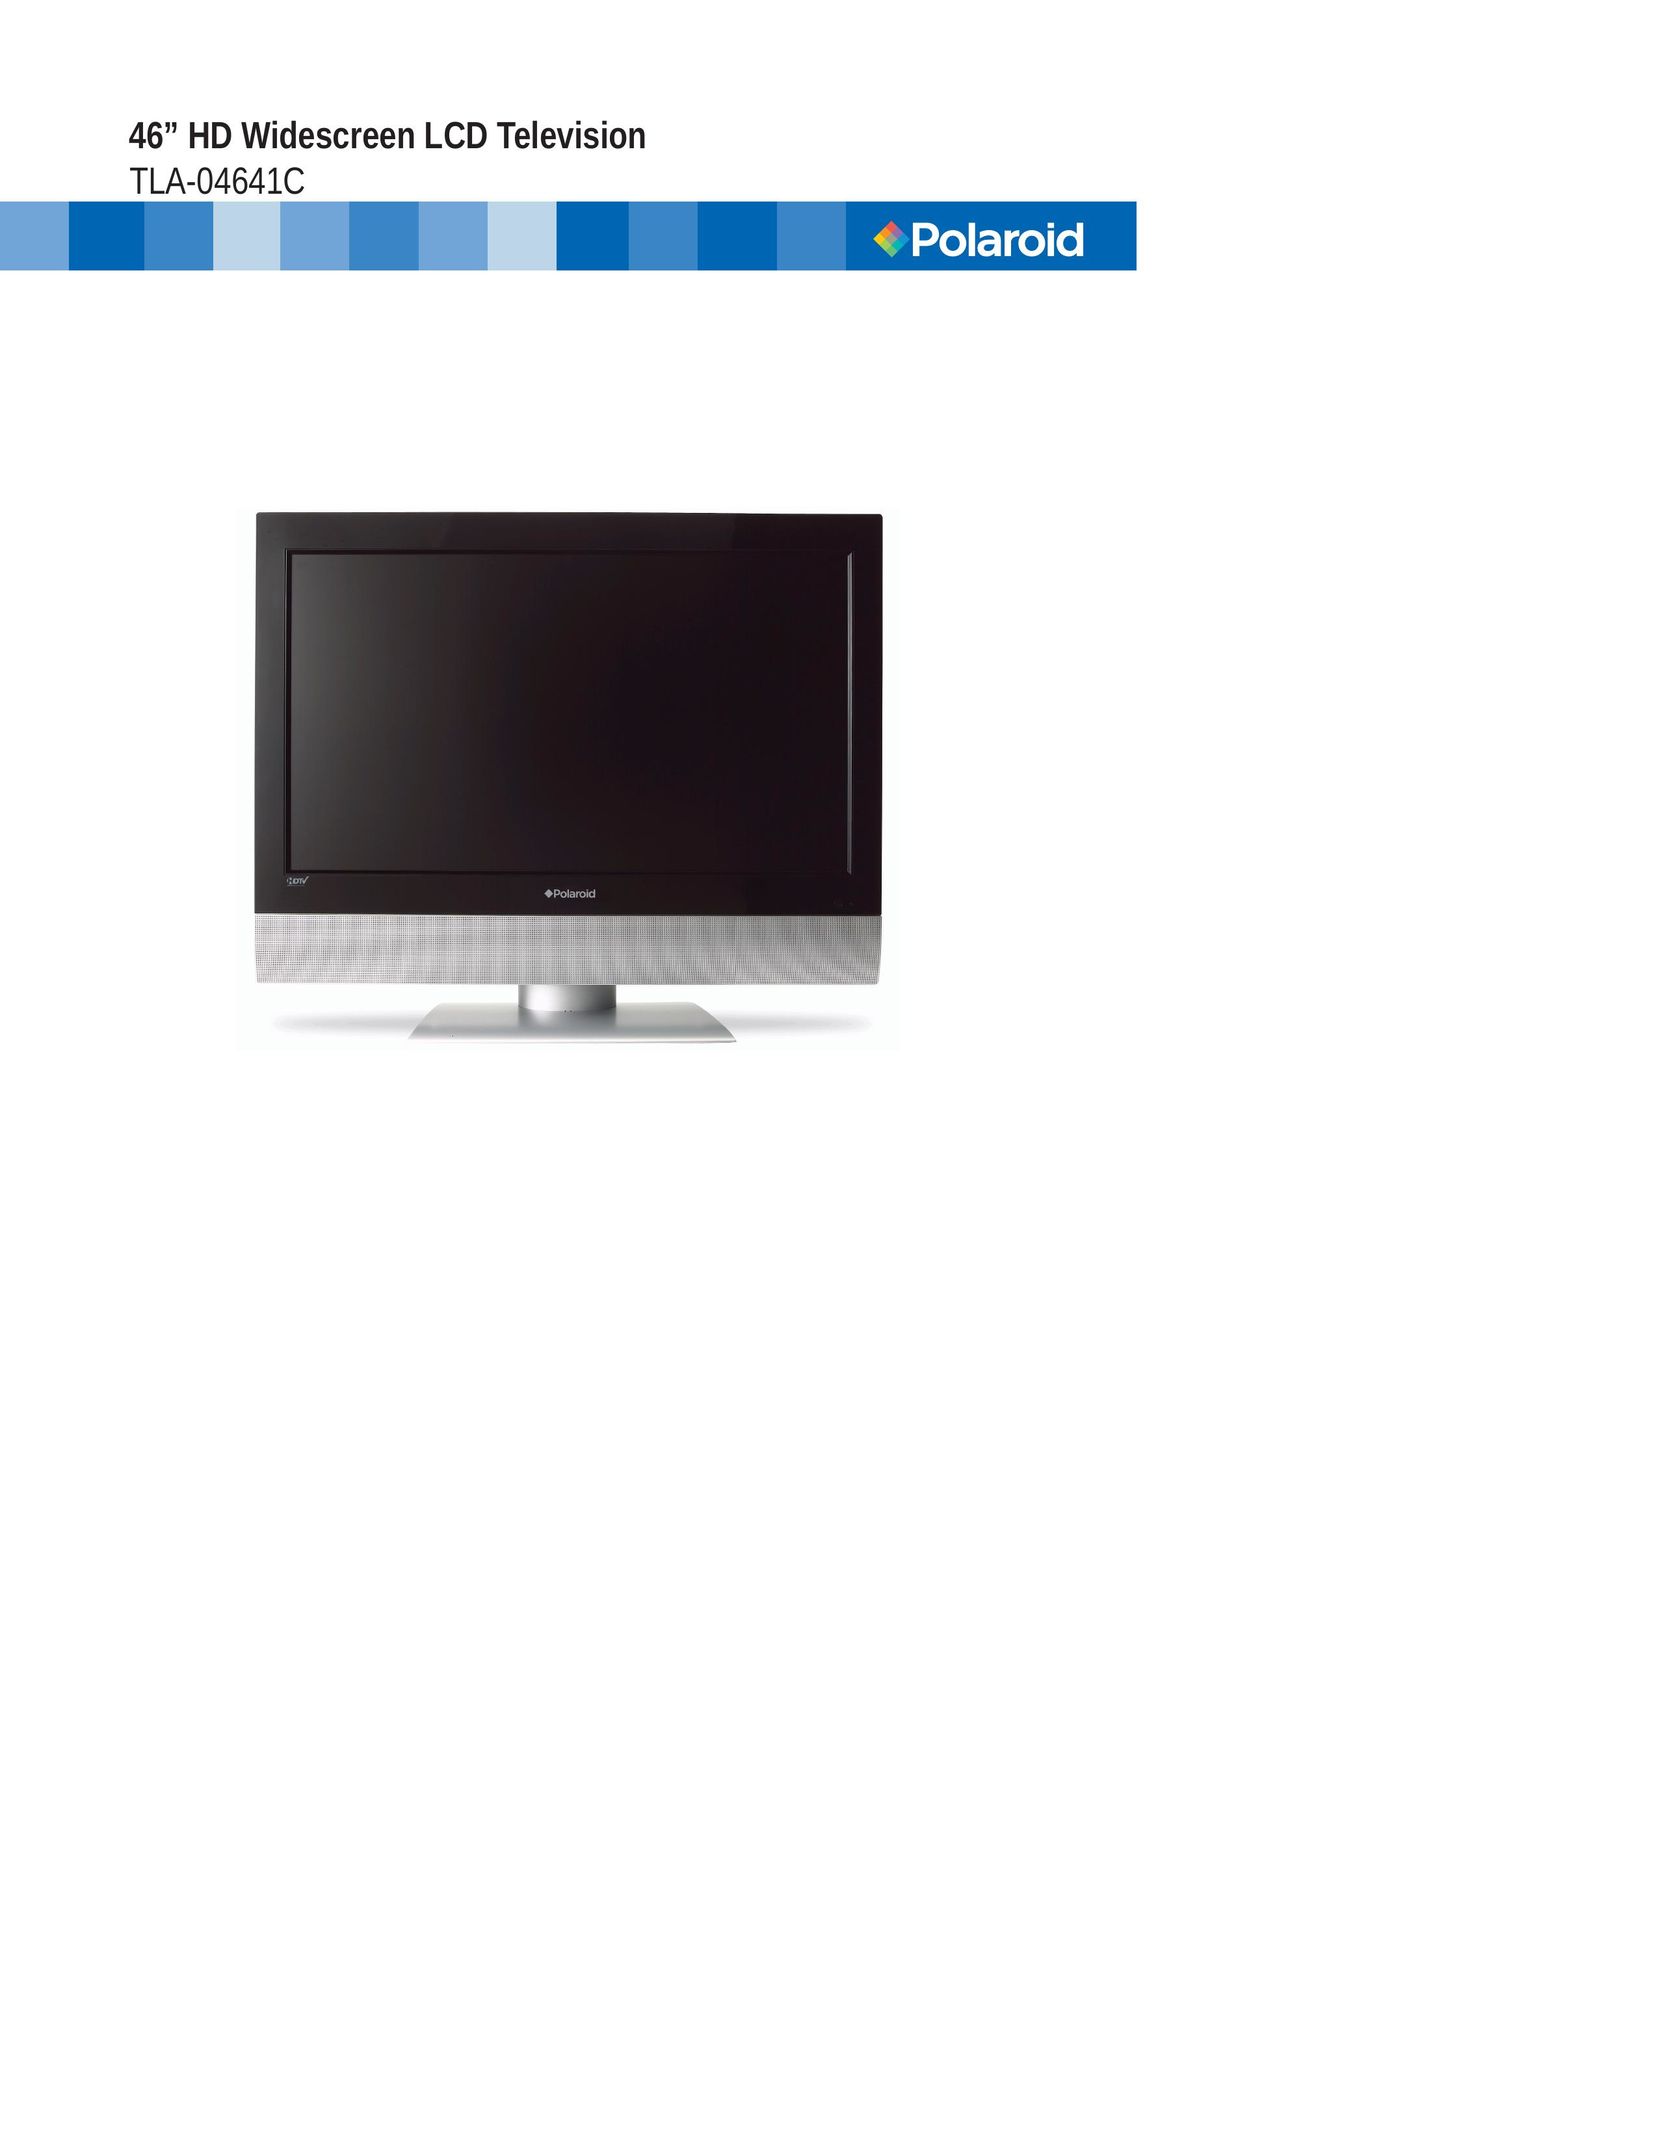 Princeton Digital (USA) TLA-04641C Flat Panel Television User Manual